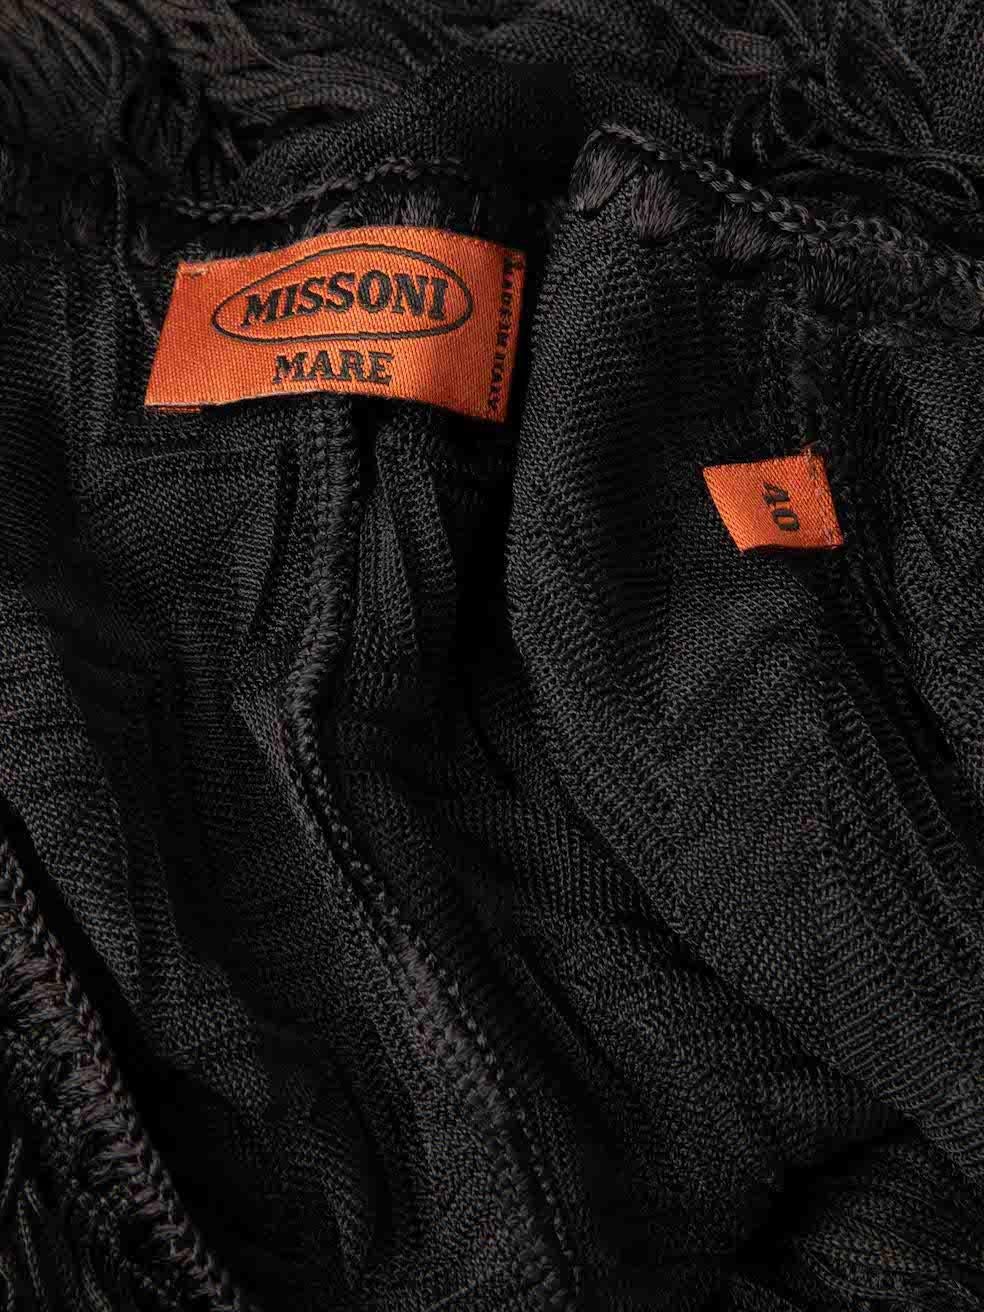 Women's Missoni Missoni Mare Black Fringe Pattern Sheer Cover Up Size S